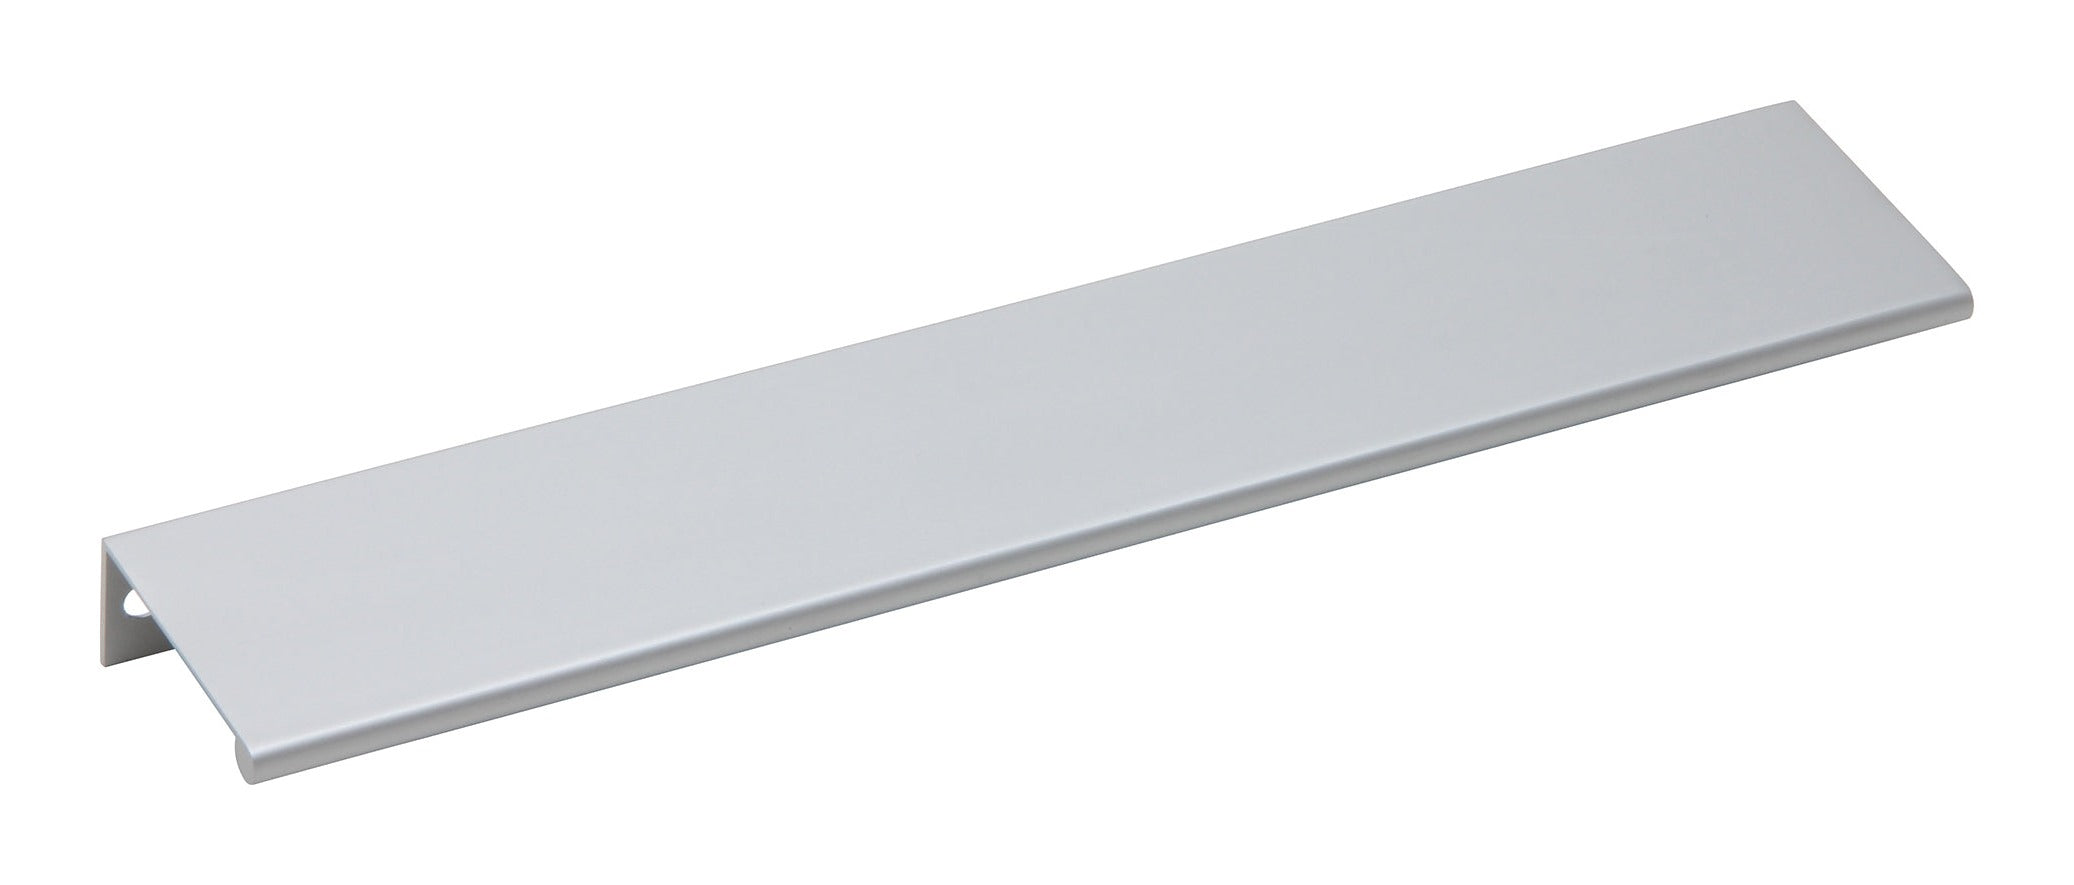 Silverline P1001 Aluminum Mount Finger Edge Tab Pull Handle in Anodized Aluminum Finish Various Sizes